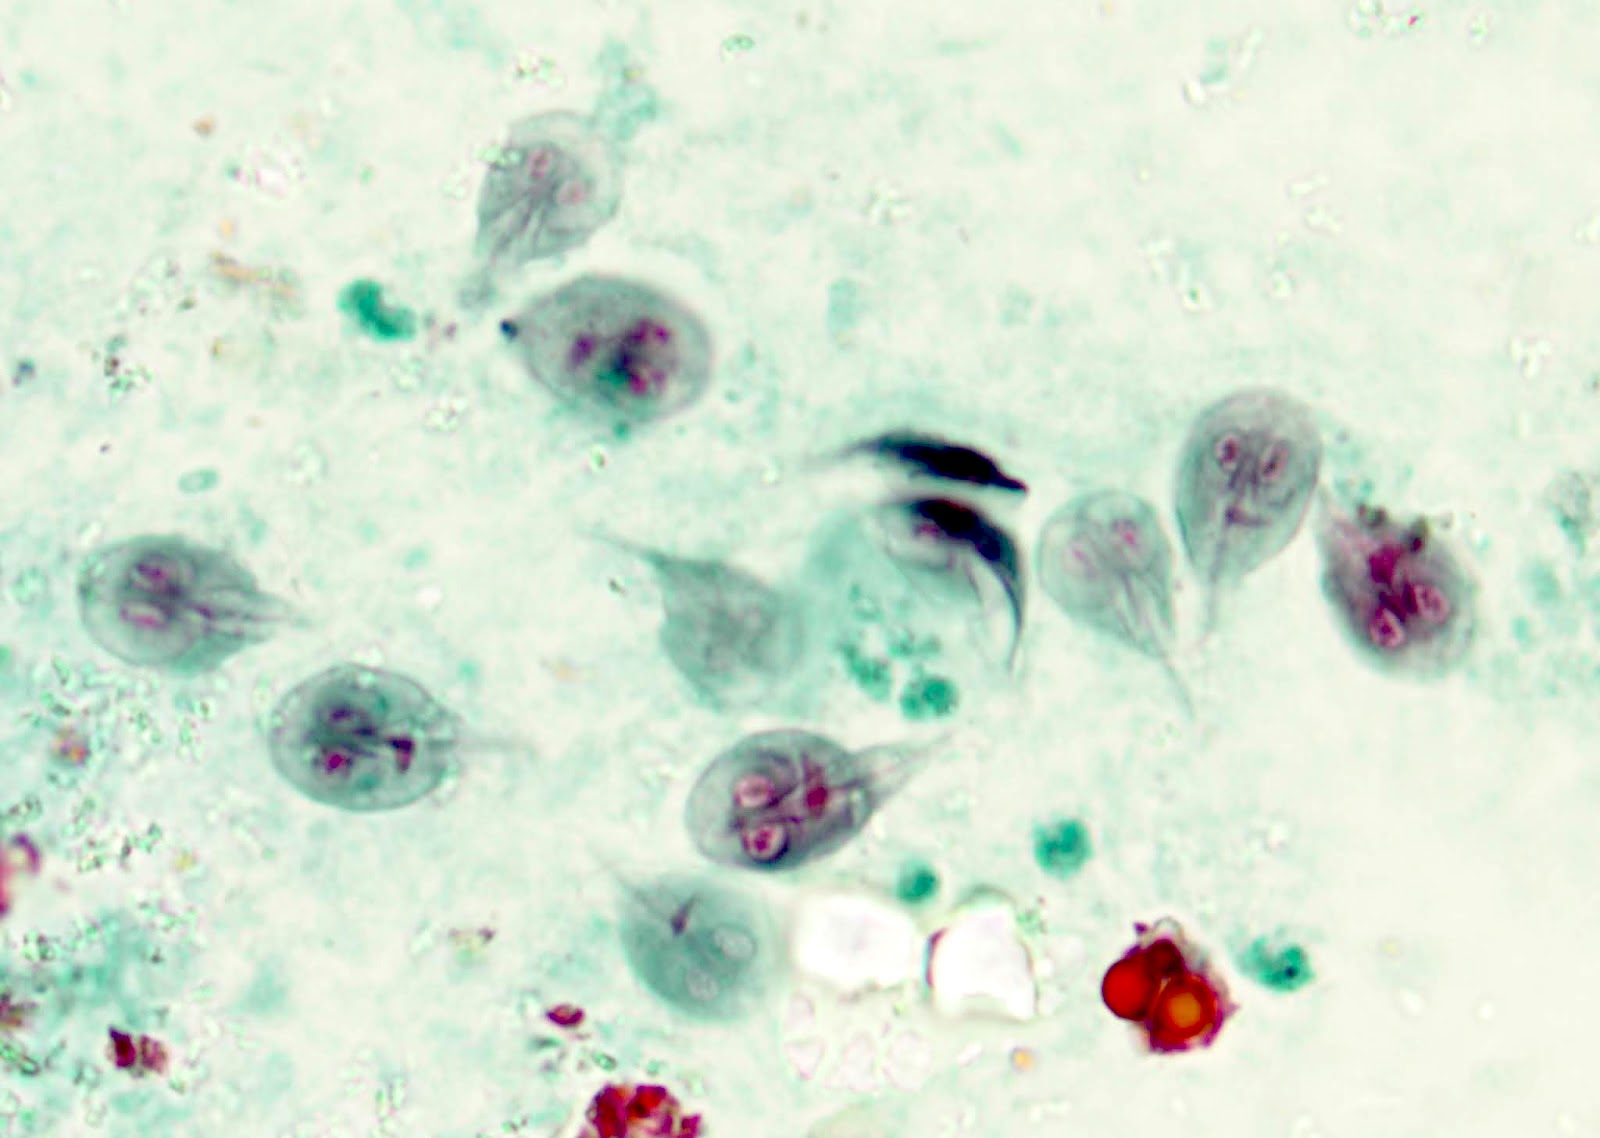 Giardiasis duodenum pathology outlines. Blog - Inter-Motor 98 Kft